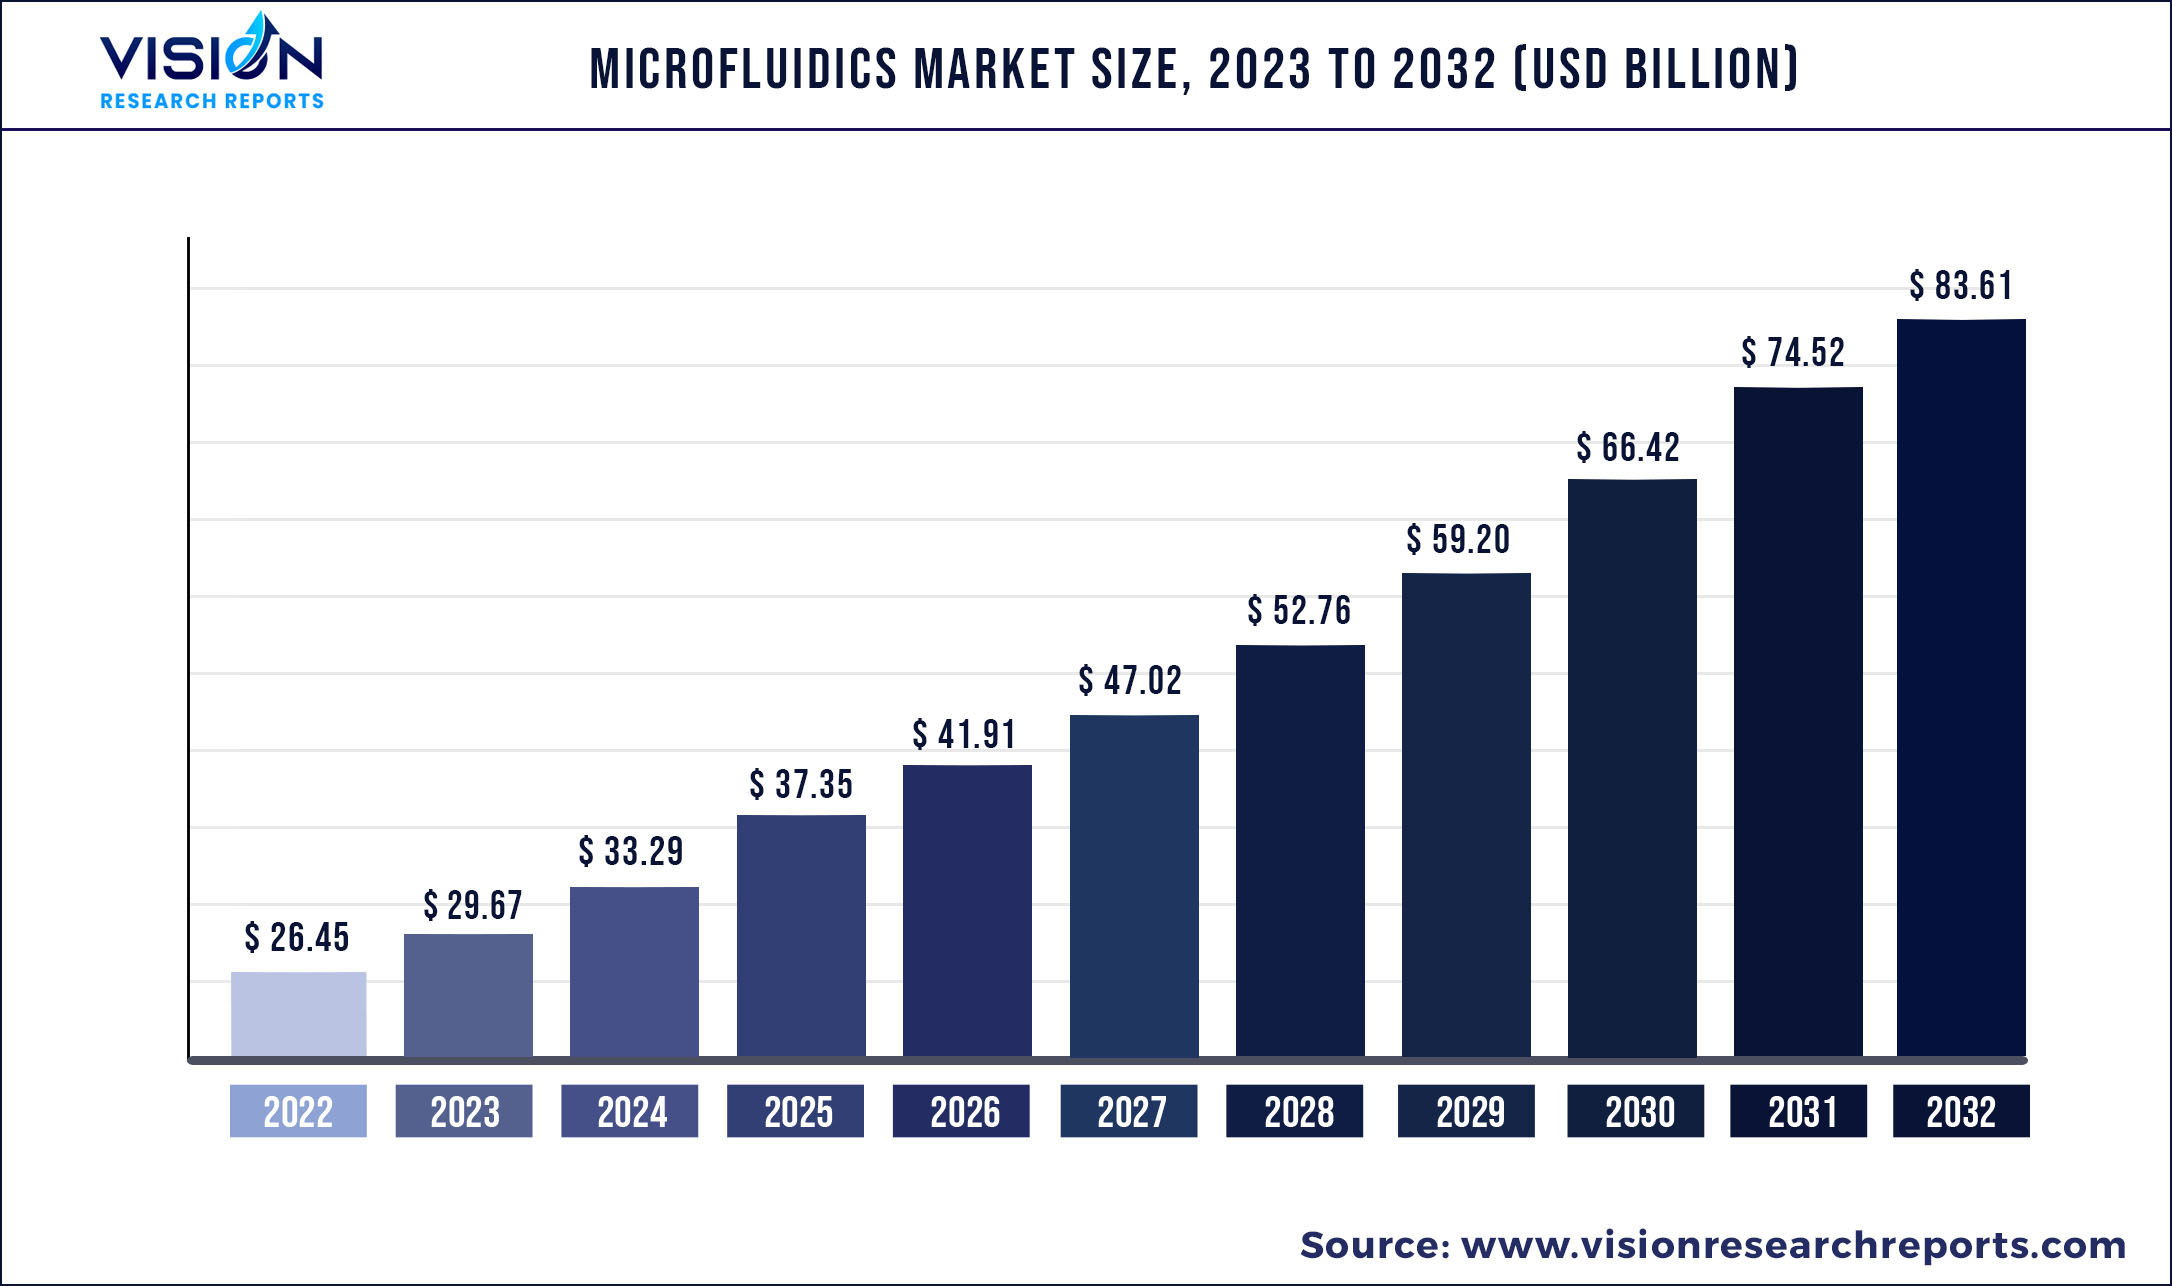 Microfluidics Market Size 2023 to 2032